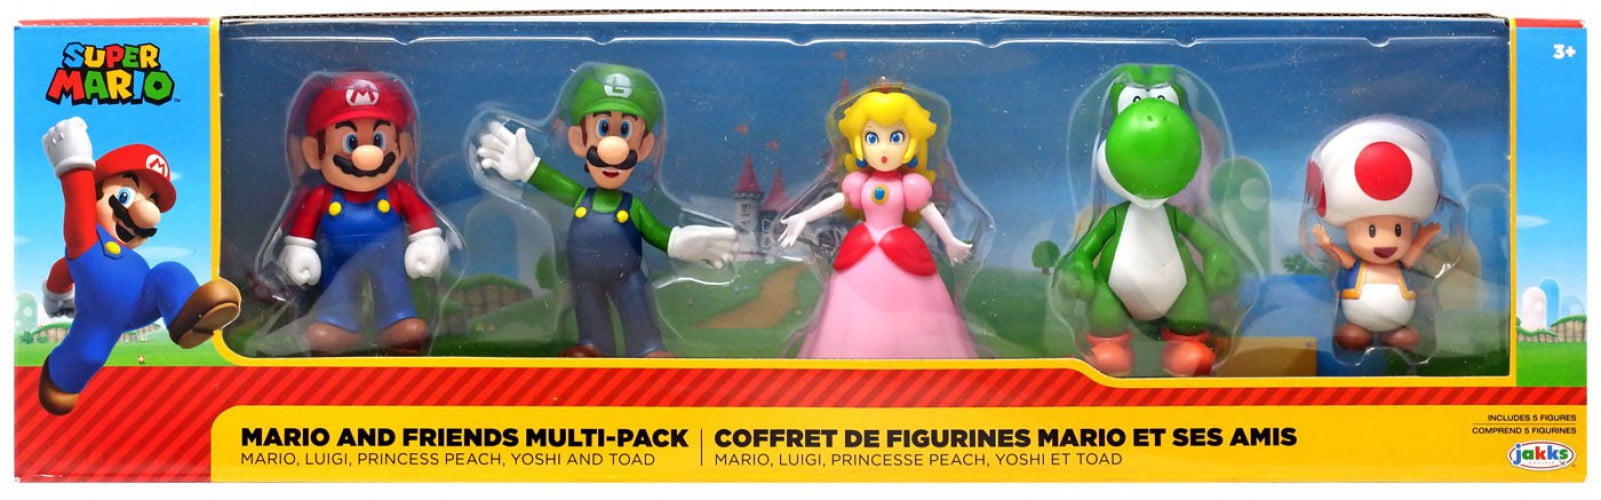 Offiziell Lizenzierte Super Mario Geschenkbox Gift Box Yoshi 